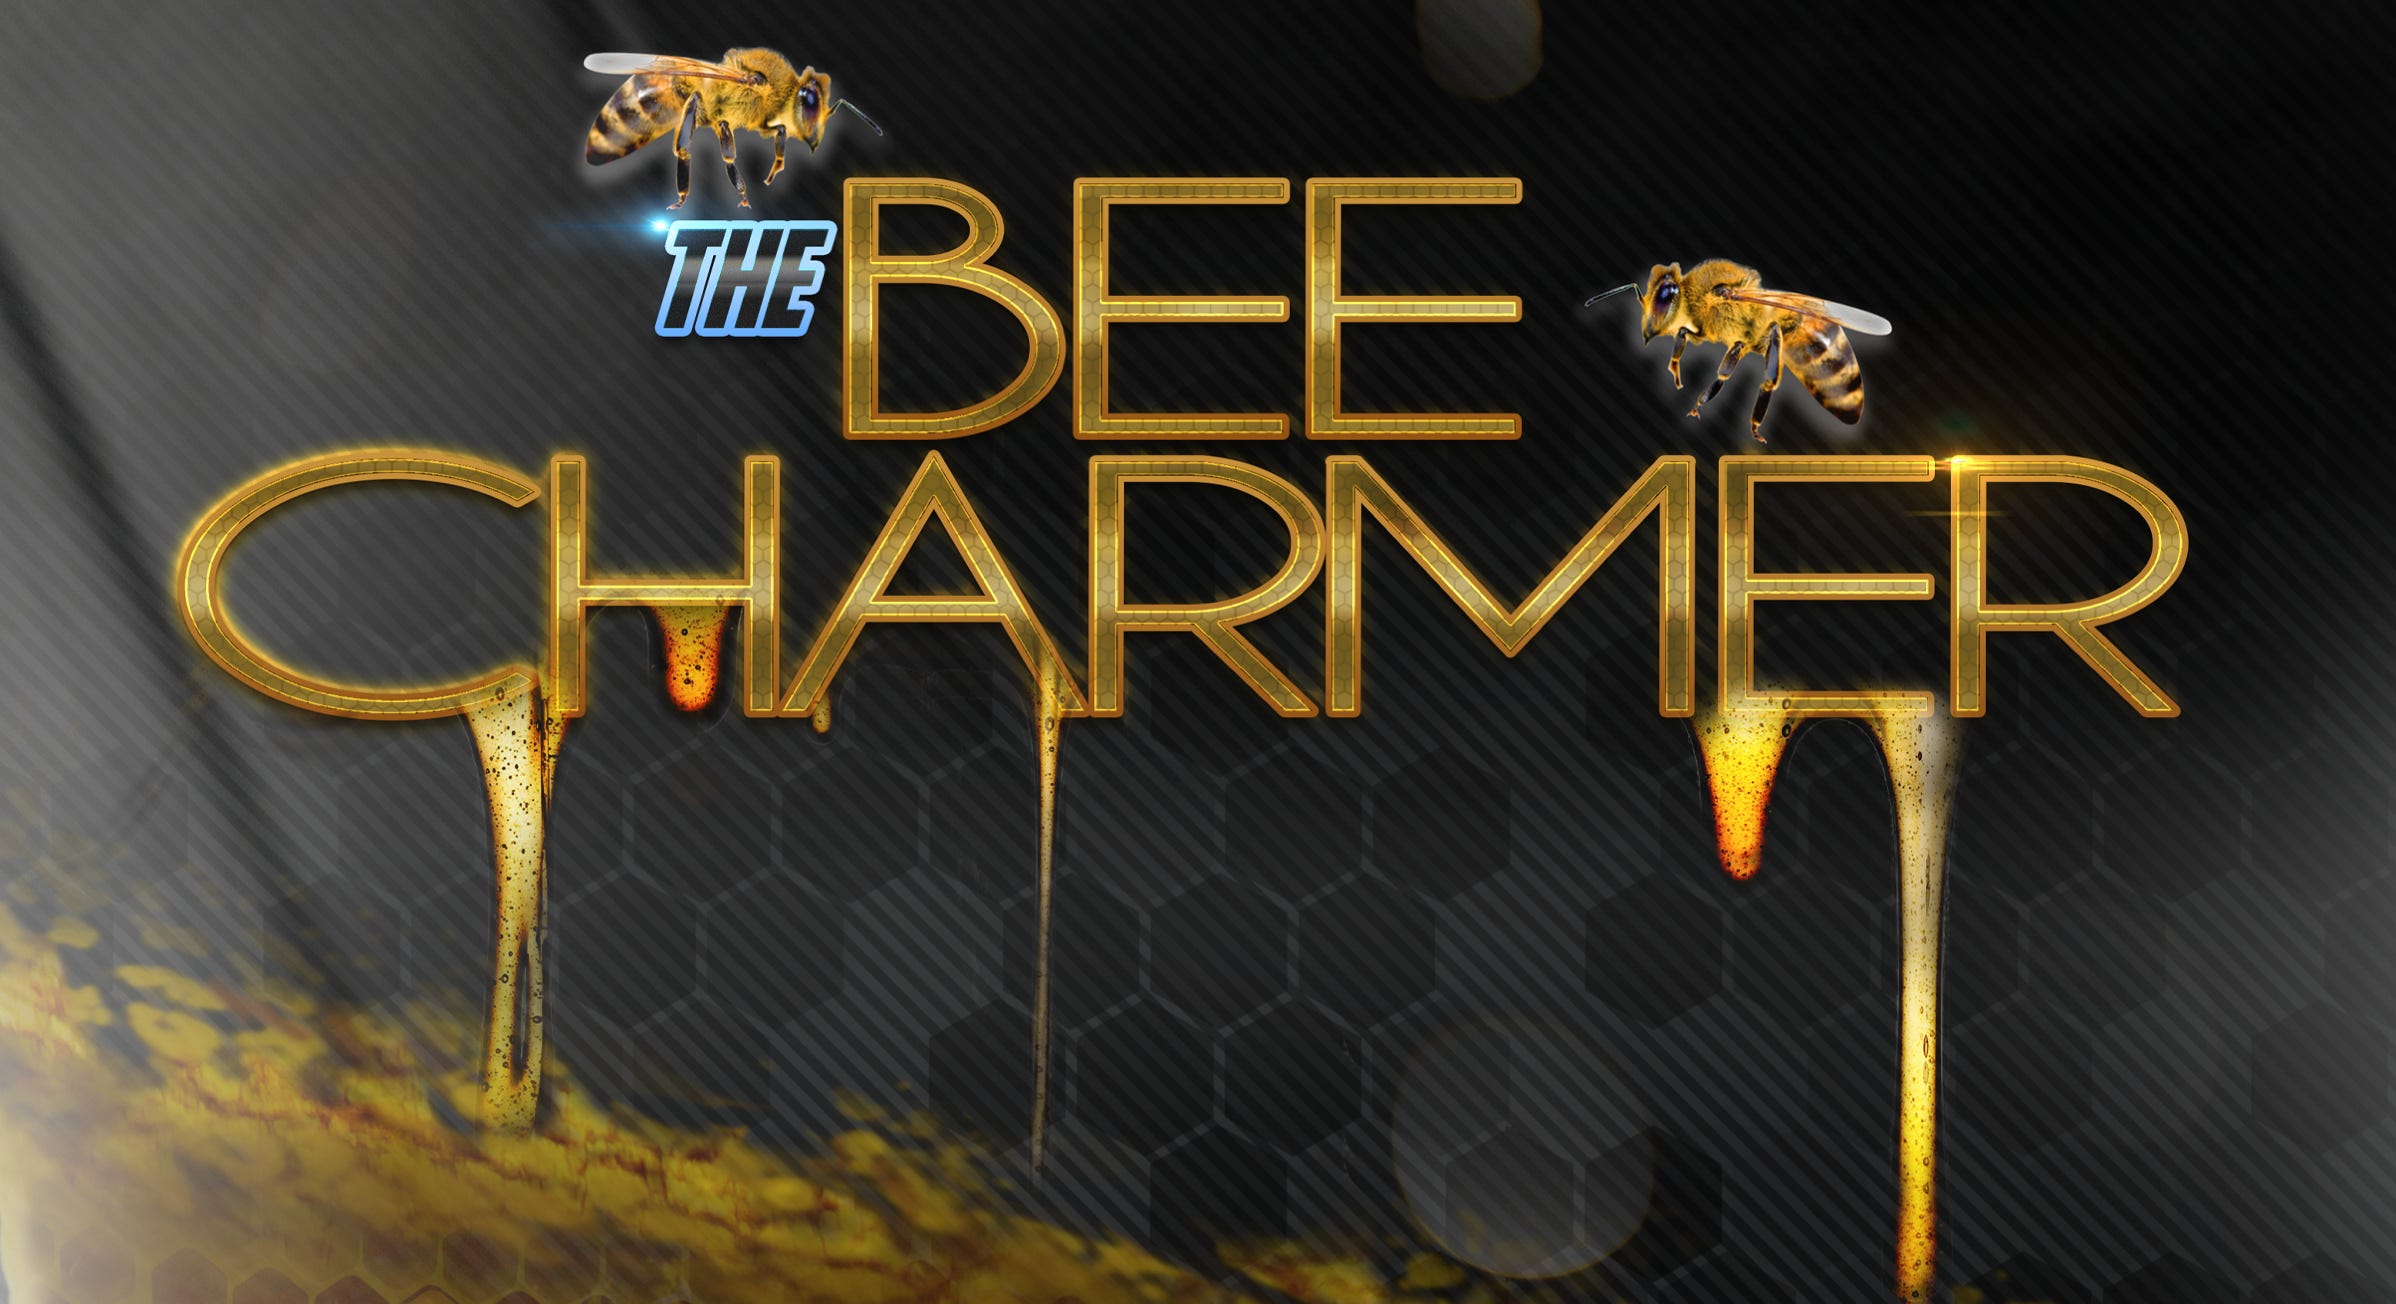 the bee charmer original series development branding examples